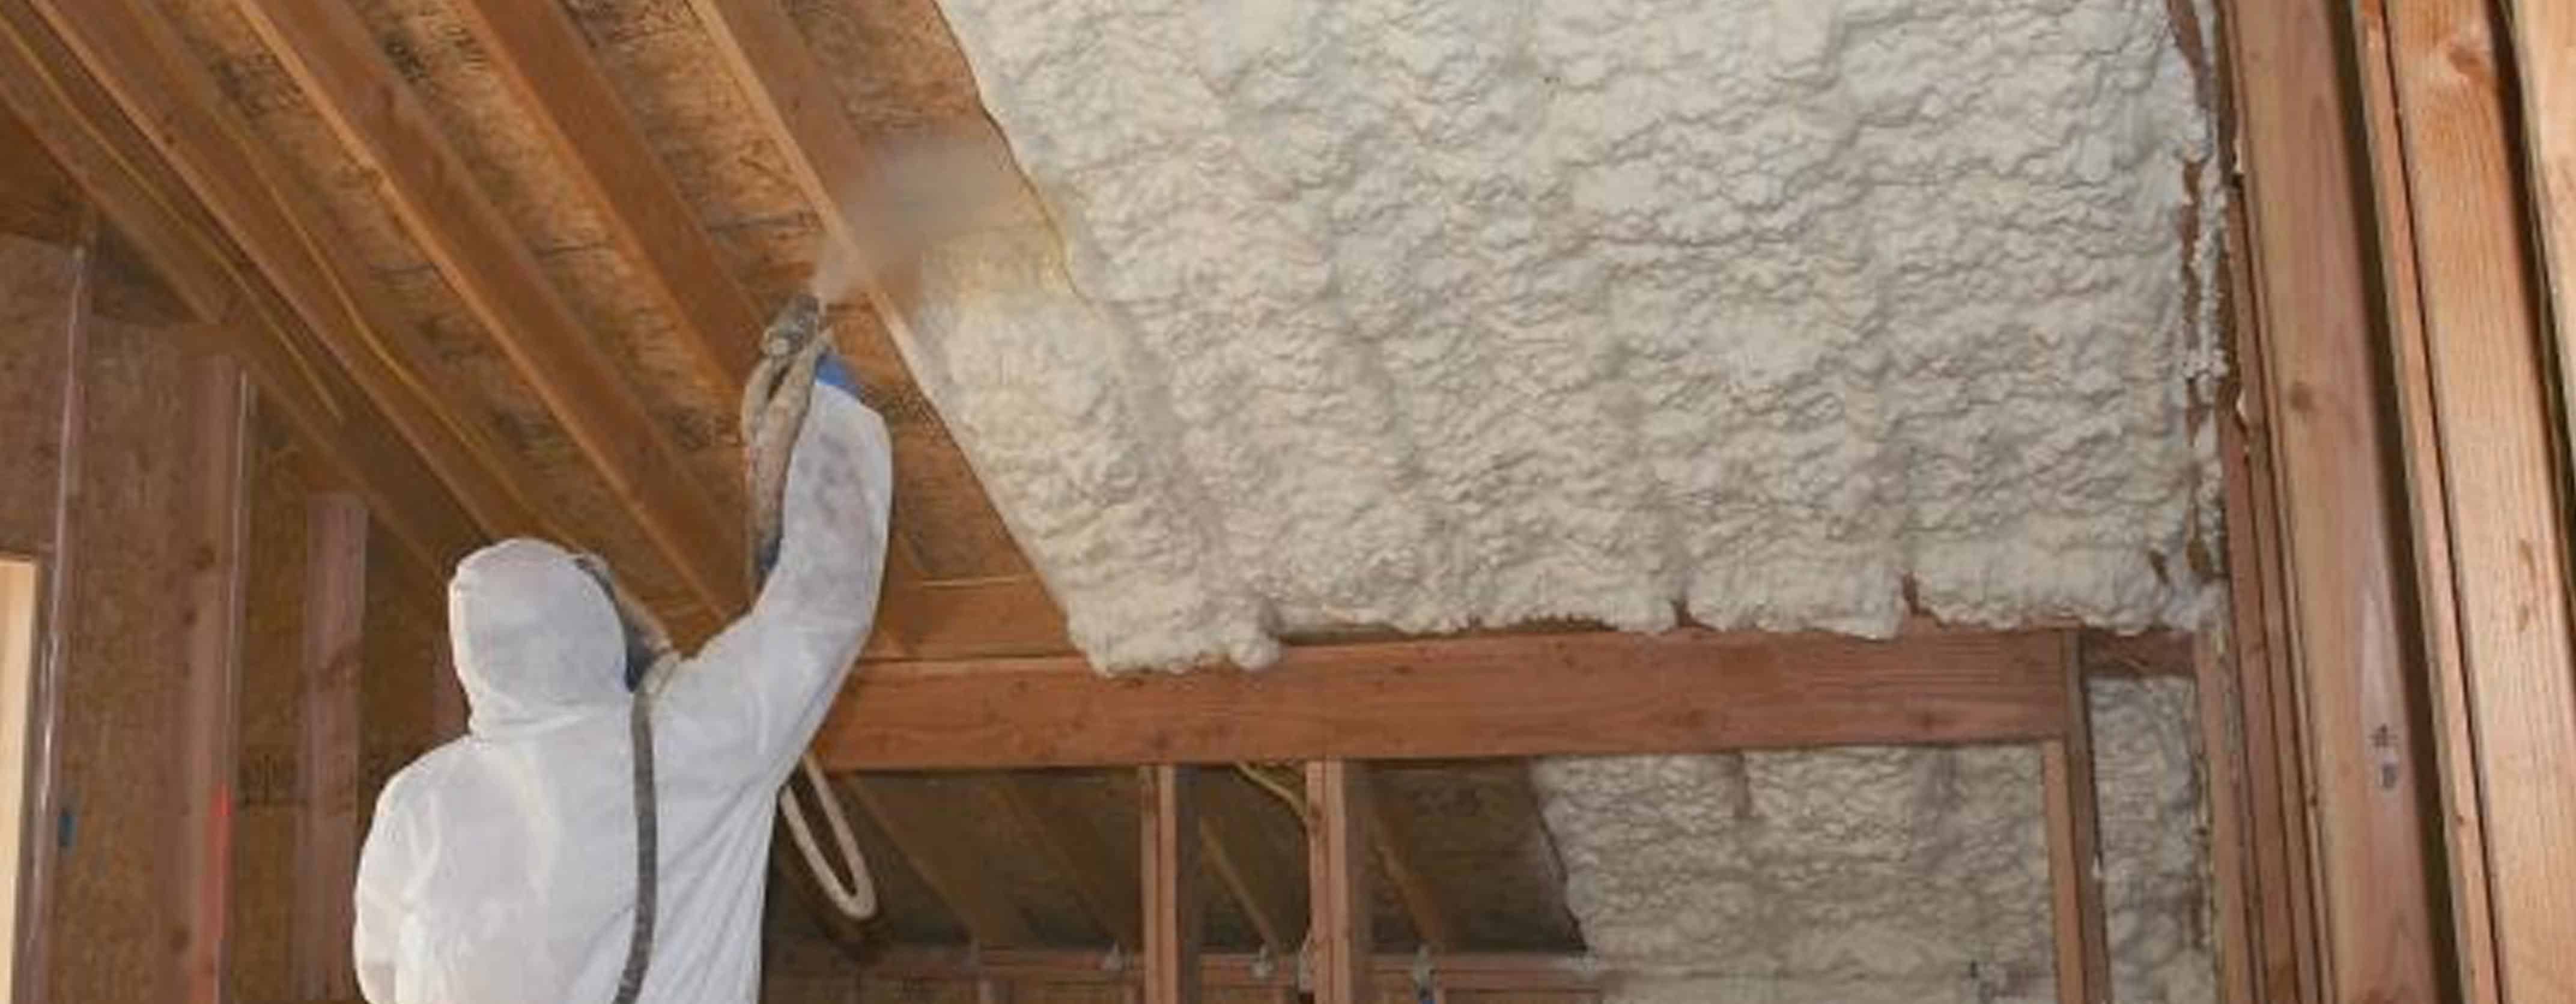 Spray Foam Attic Insulation South Florida Ducts Free Onsite Estimate